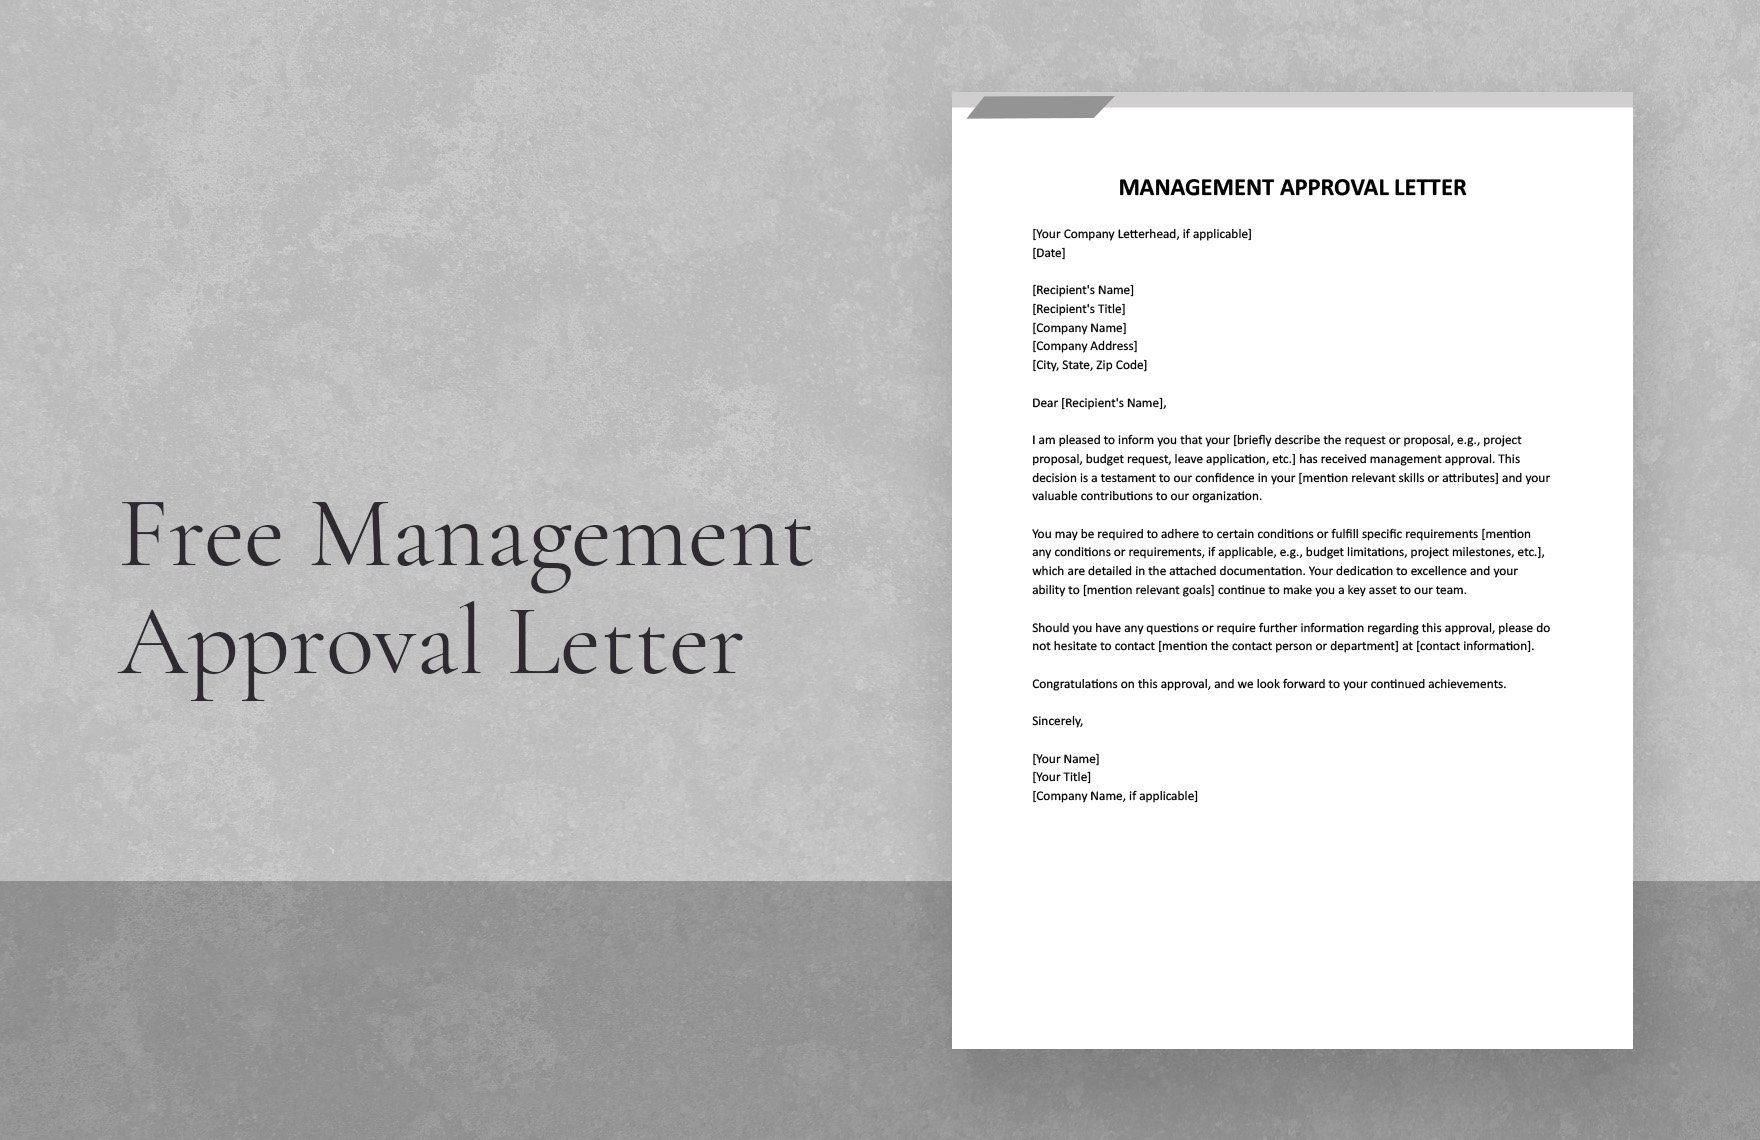 Management Approval Letter in Word, Google Docs